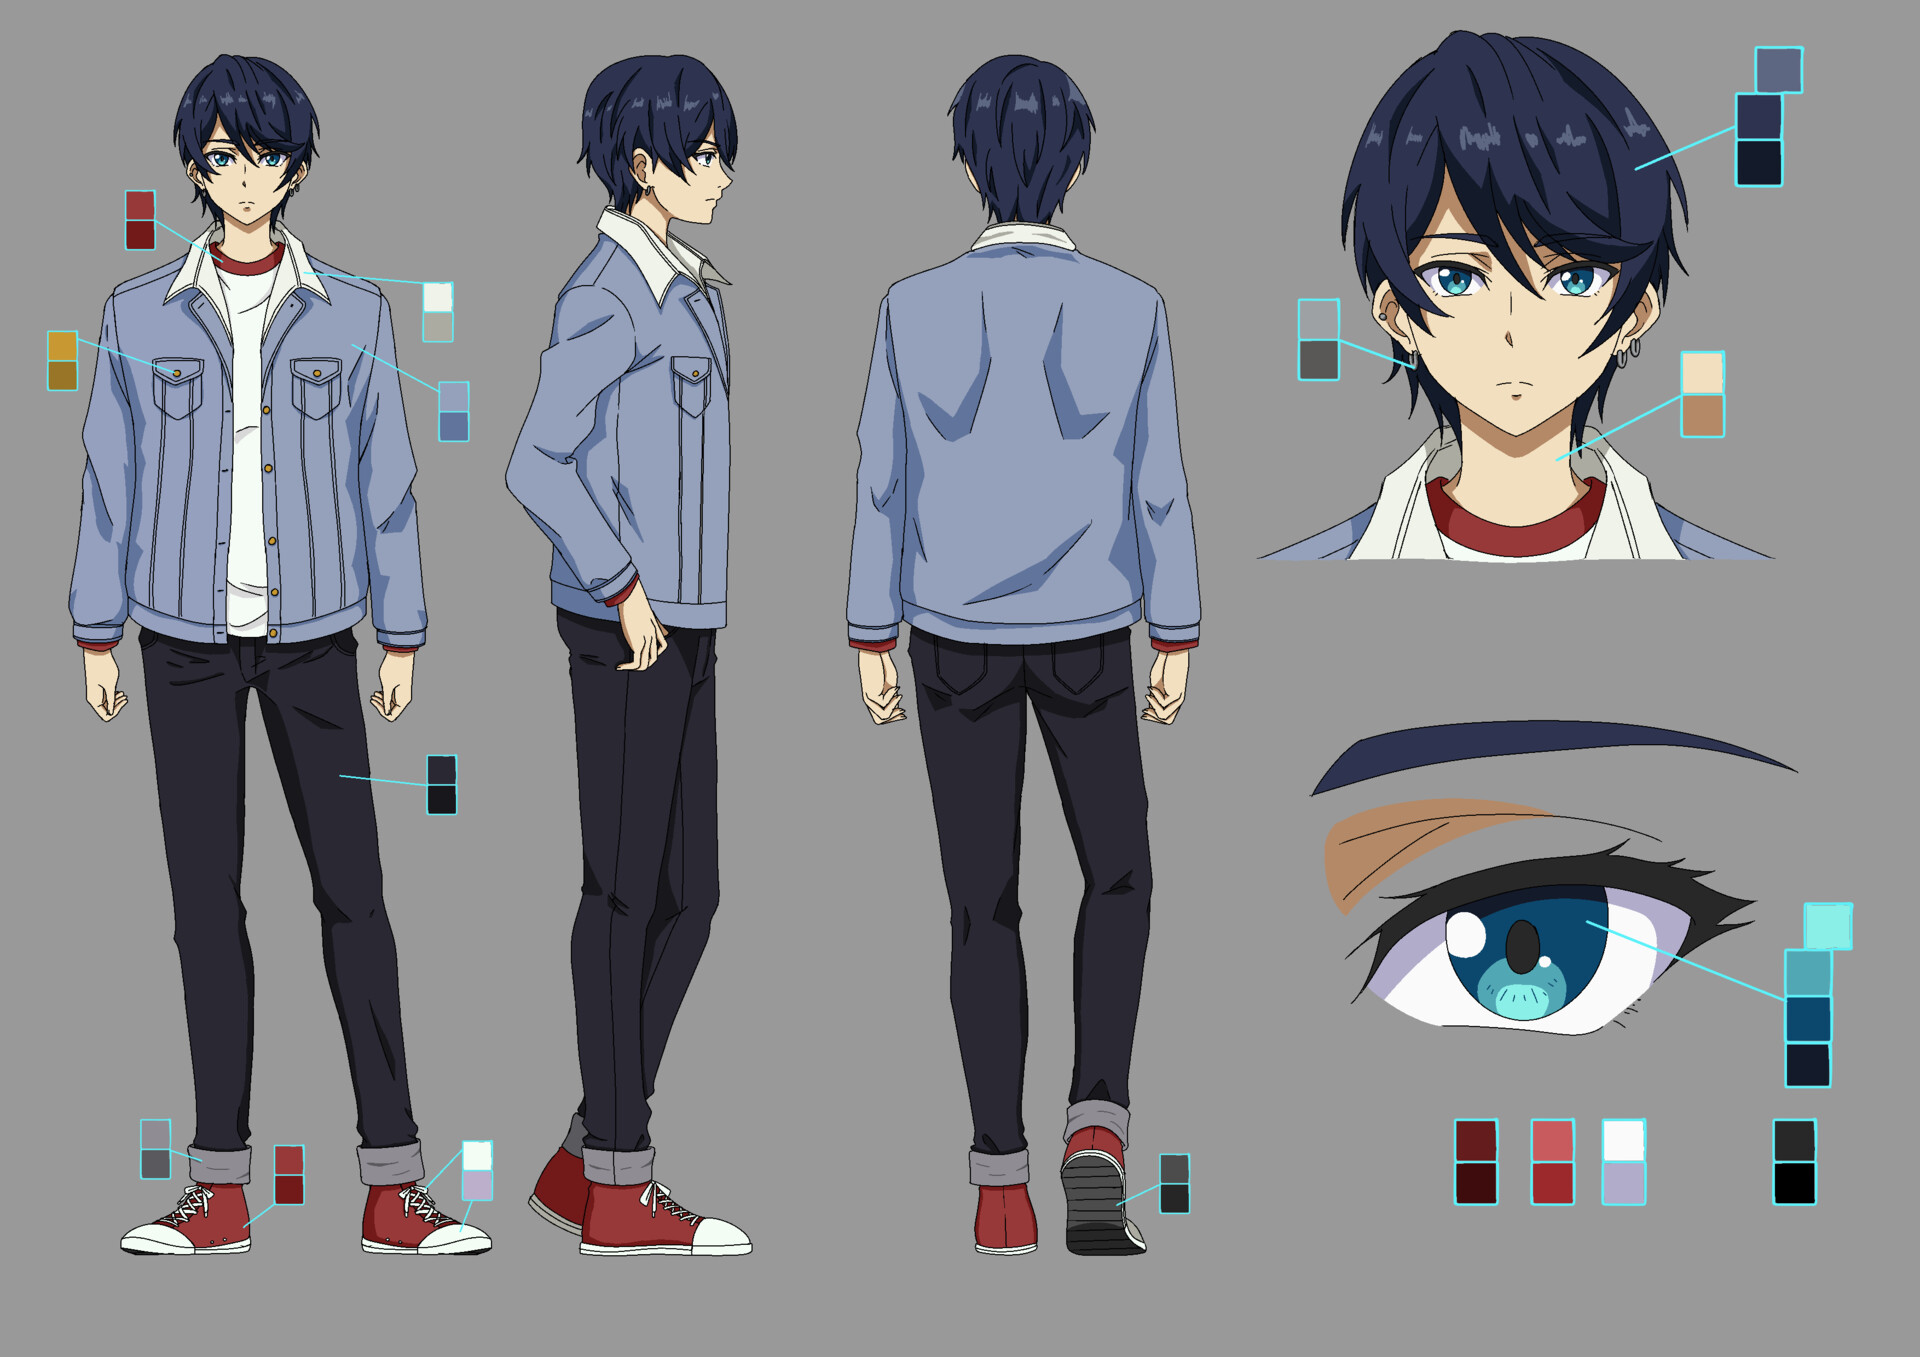 Original anime character design by Asadamiyuki on DeviantArt